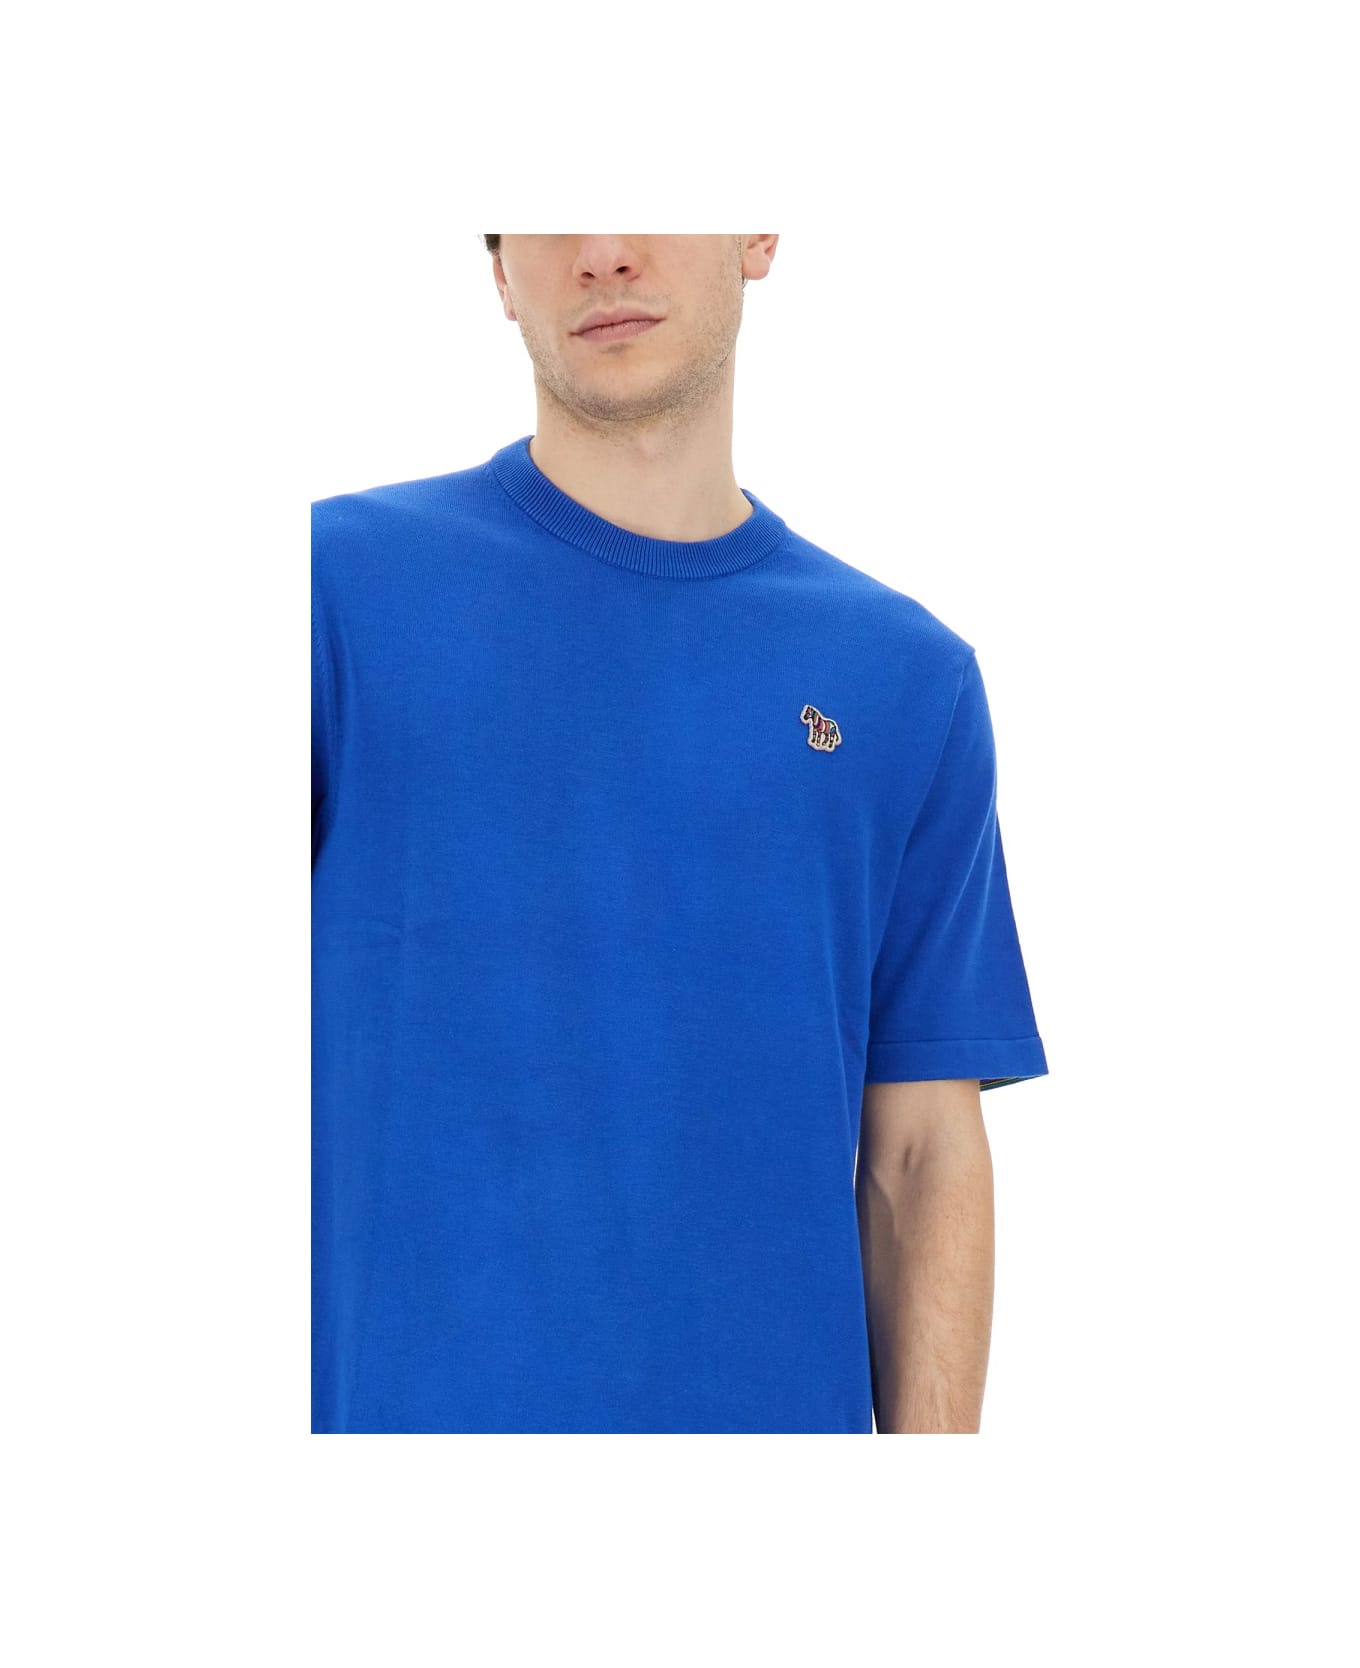 PS by Paul Smith "zebra" T-shirt - BLUE シャツ